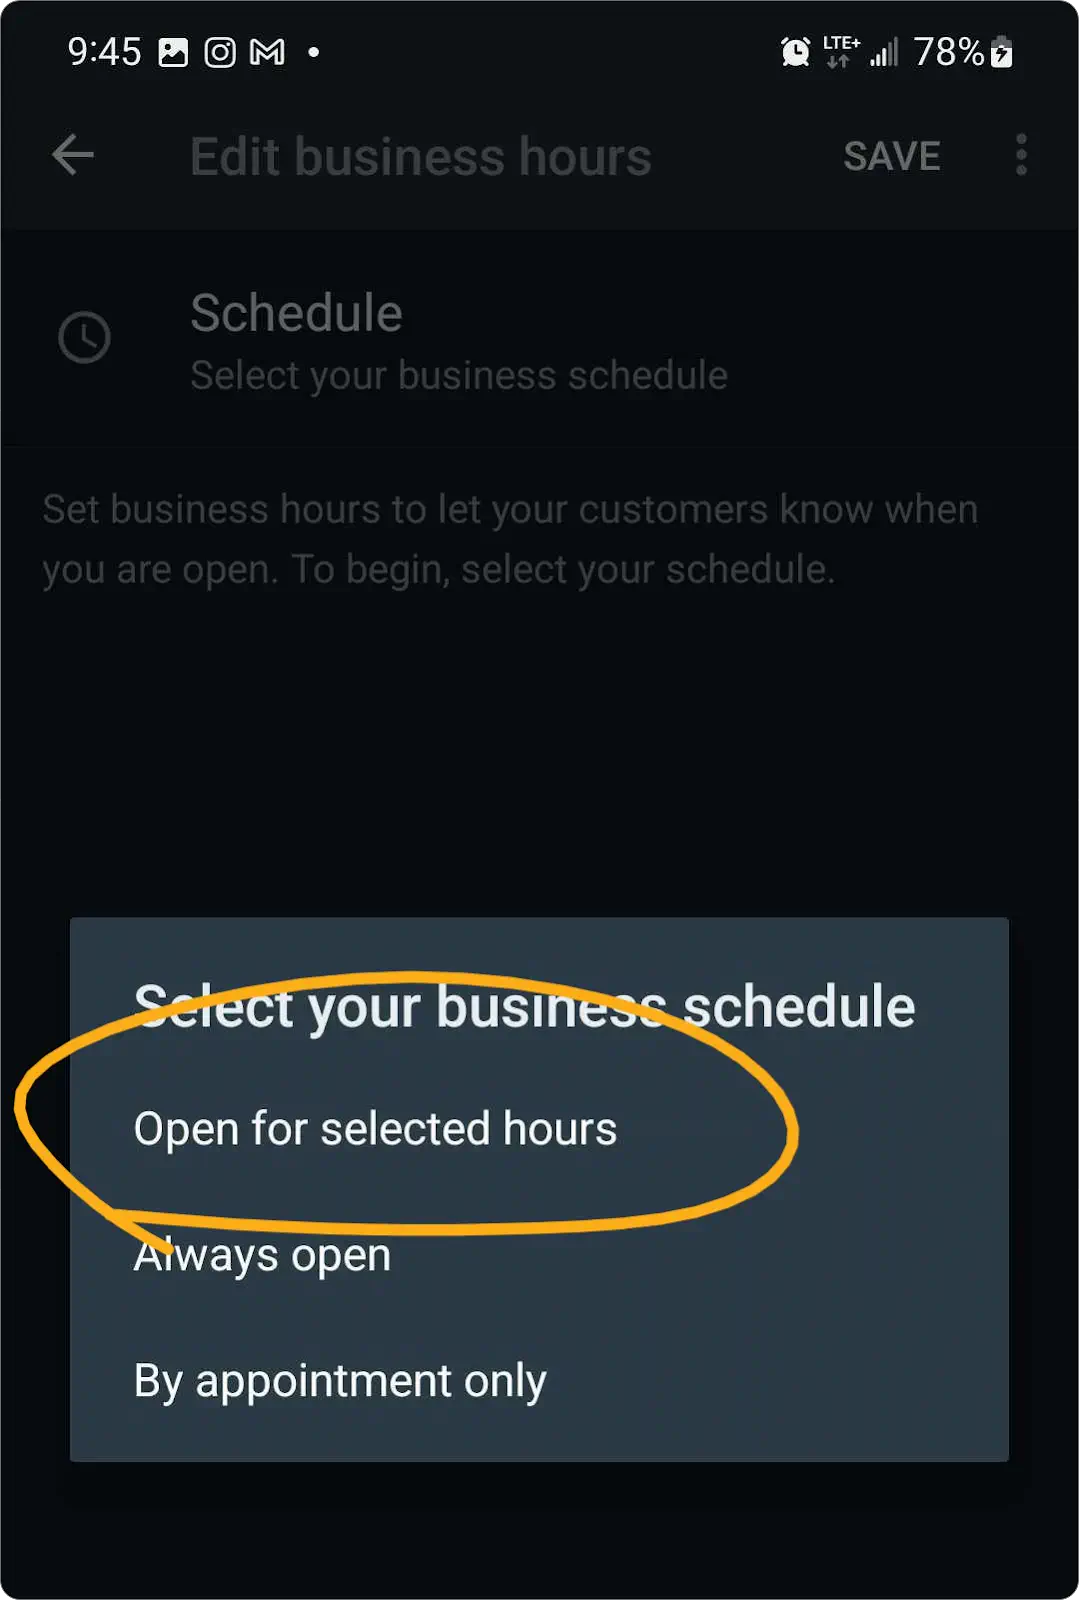 Customizing business hours.